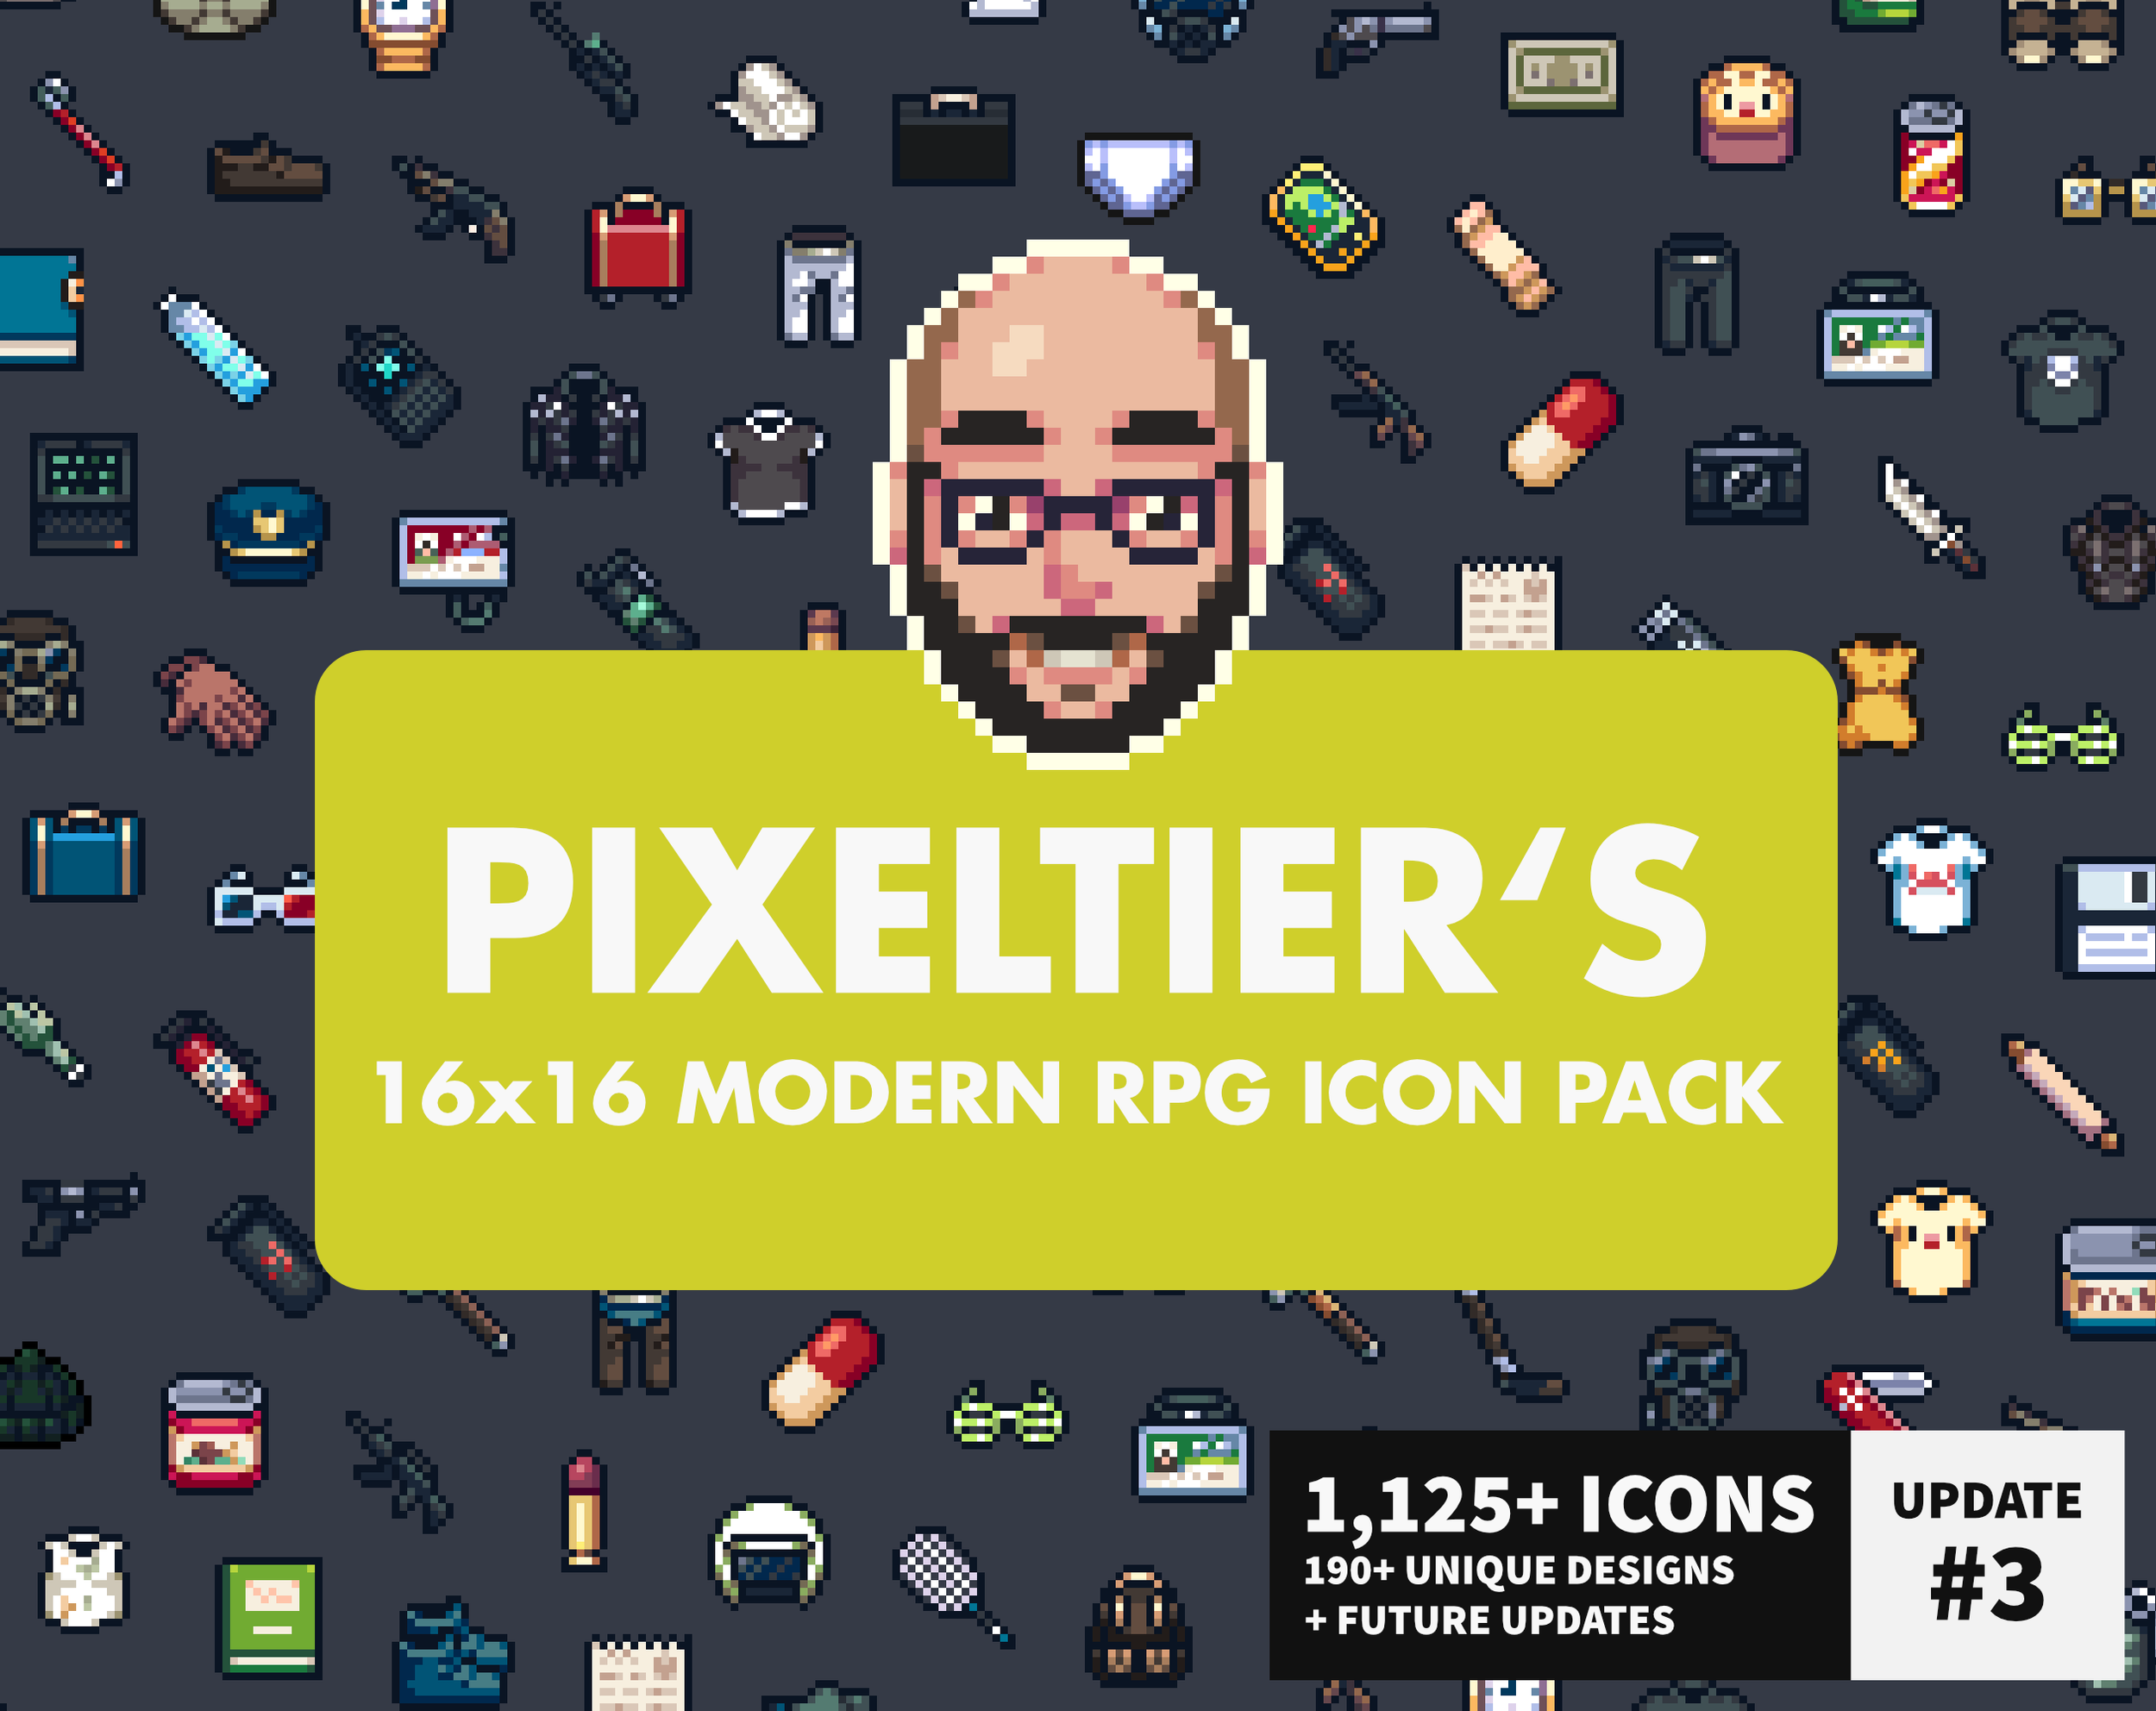  Pixeltier's 16x16 Modern RPG Icon Pack